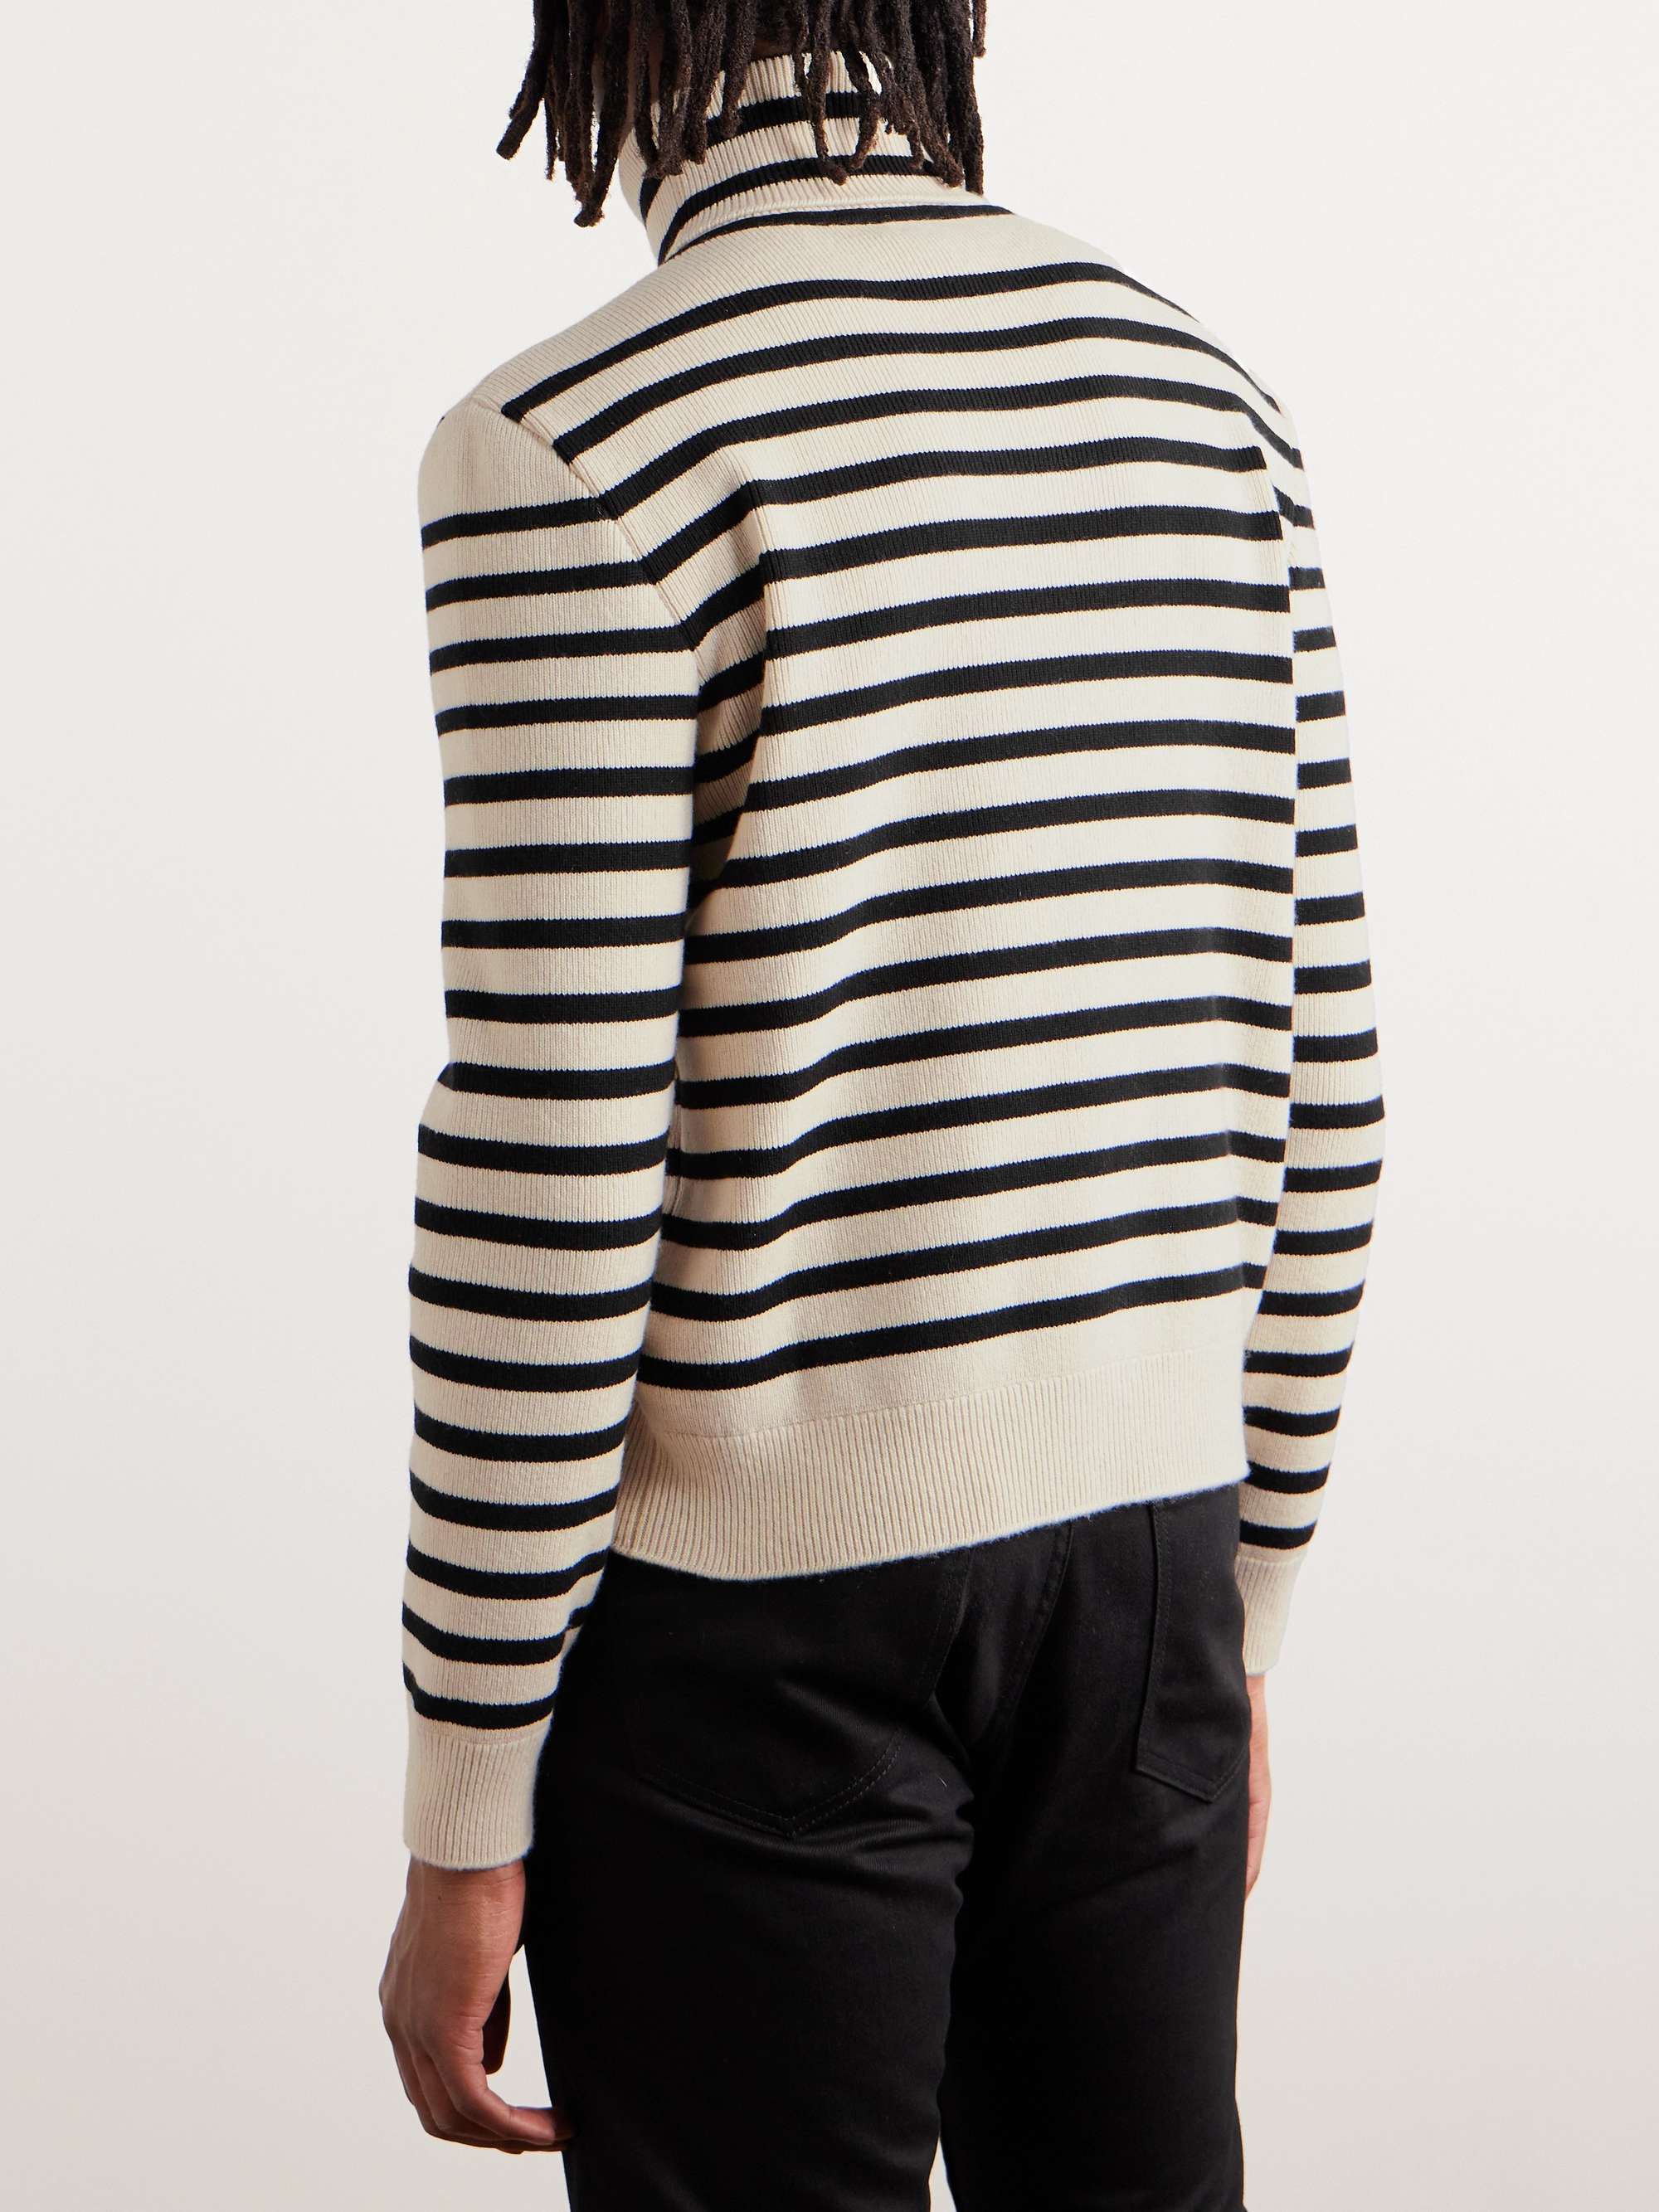 CELINE HOMME Striped Wool and Cashmere-Blend Rollneck Sweater for Men ...